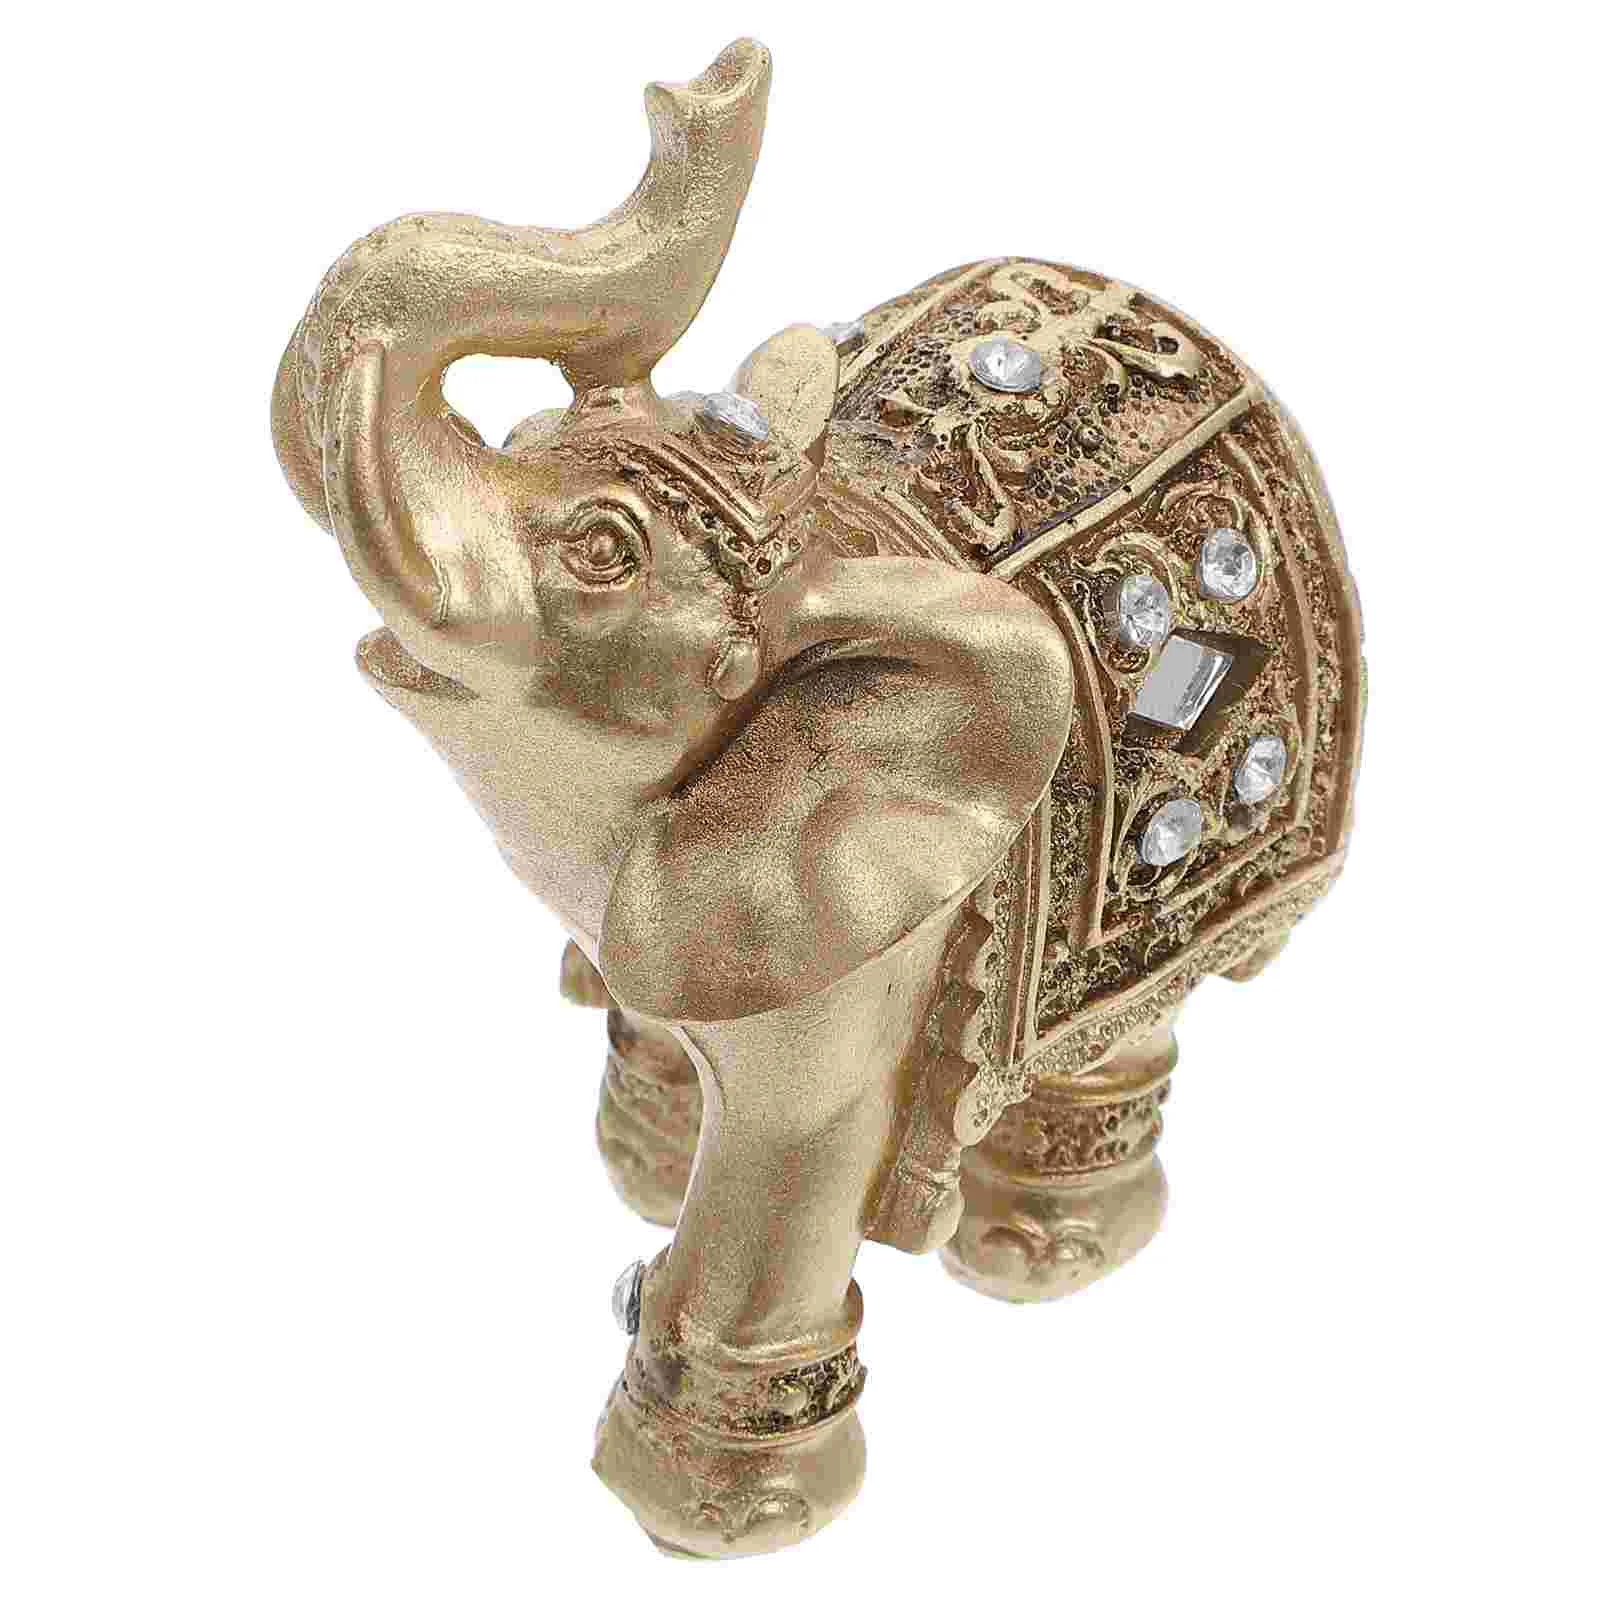 

Brass Animal Statue Elephant Sculpture Decor Home Fengshui Figurine Desktop Decor Elephant Ornaments Decorations Elephant Statue